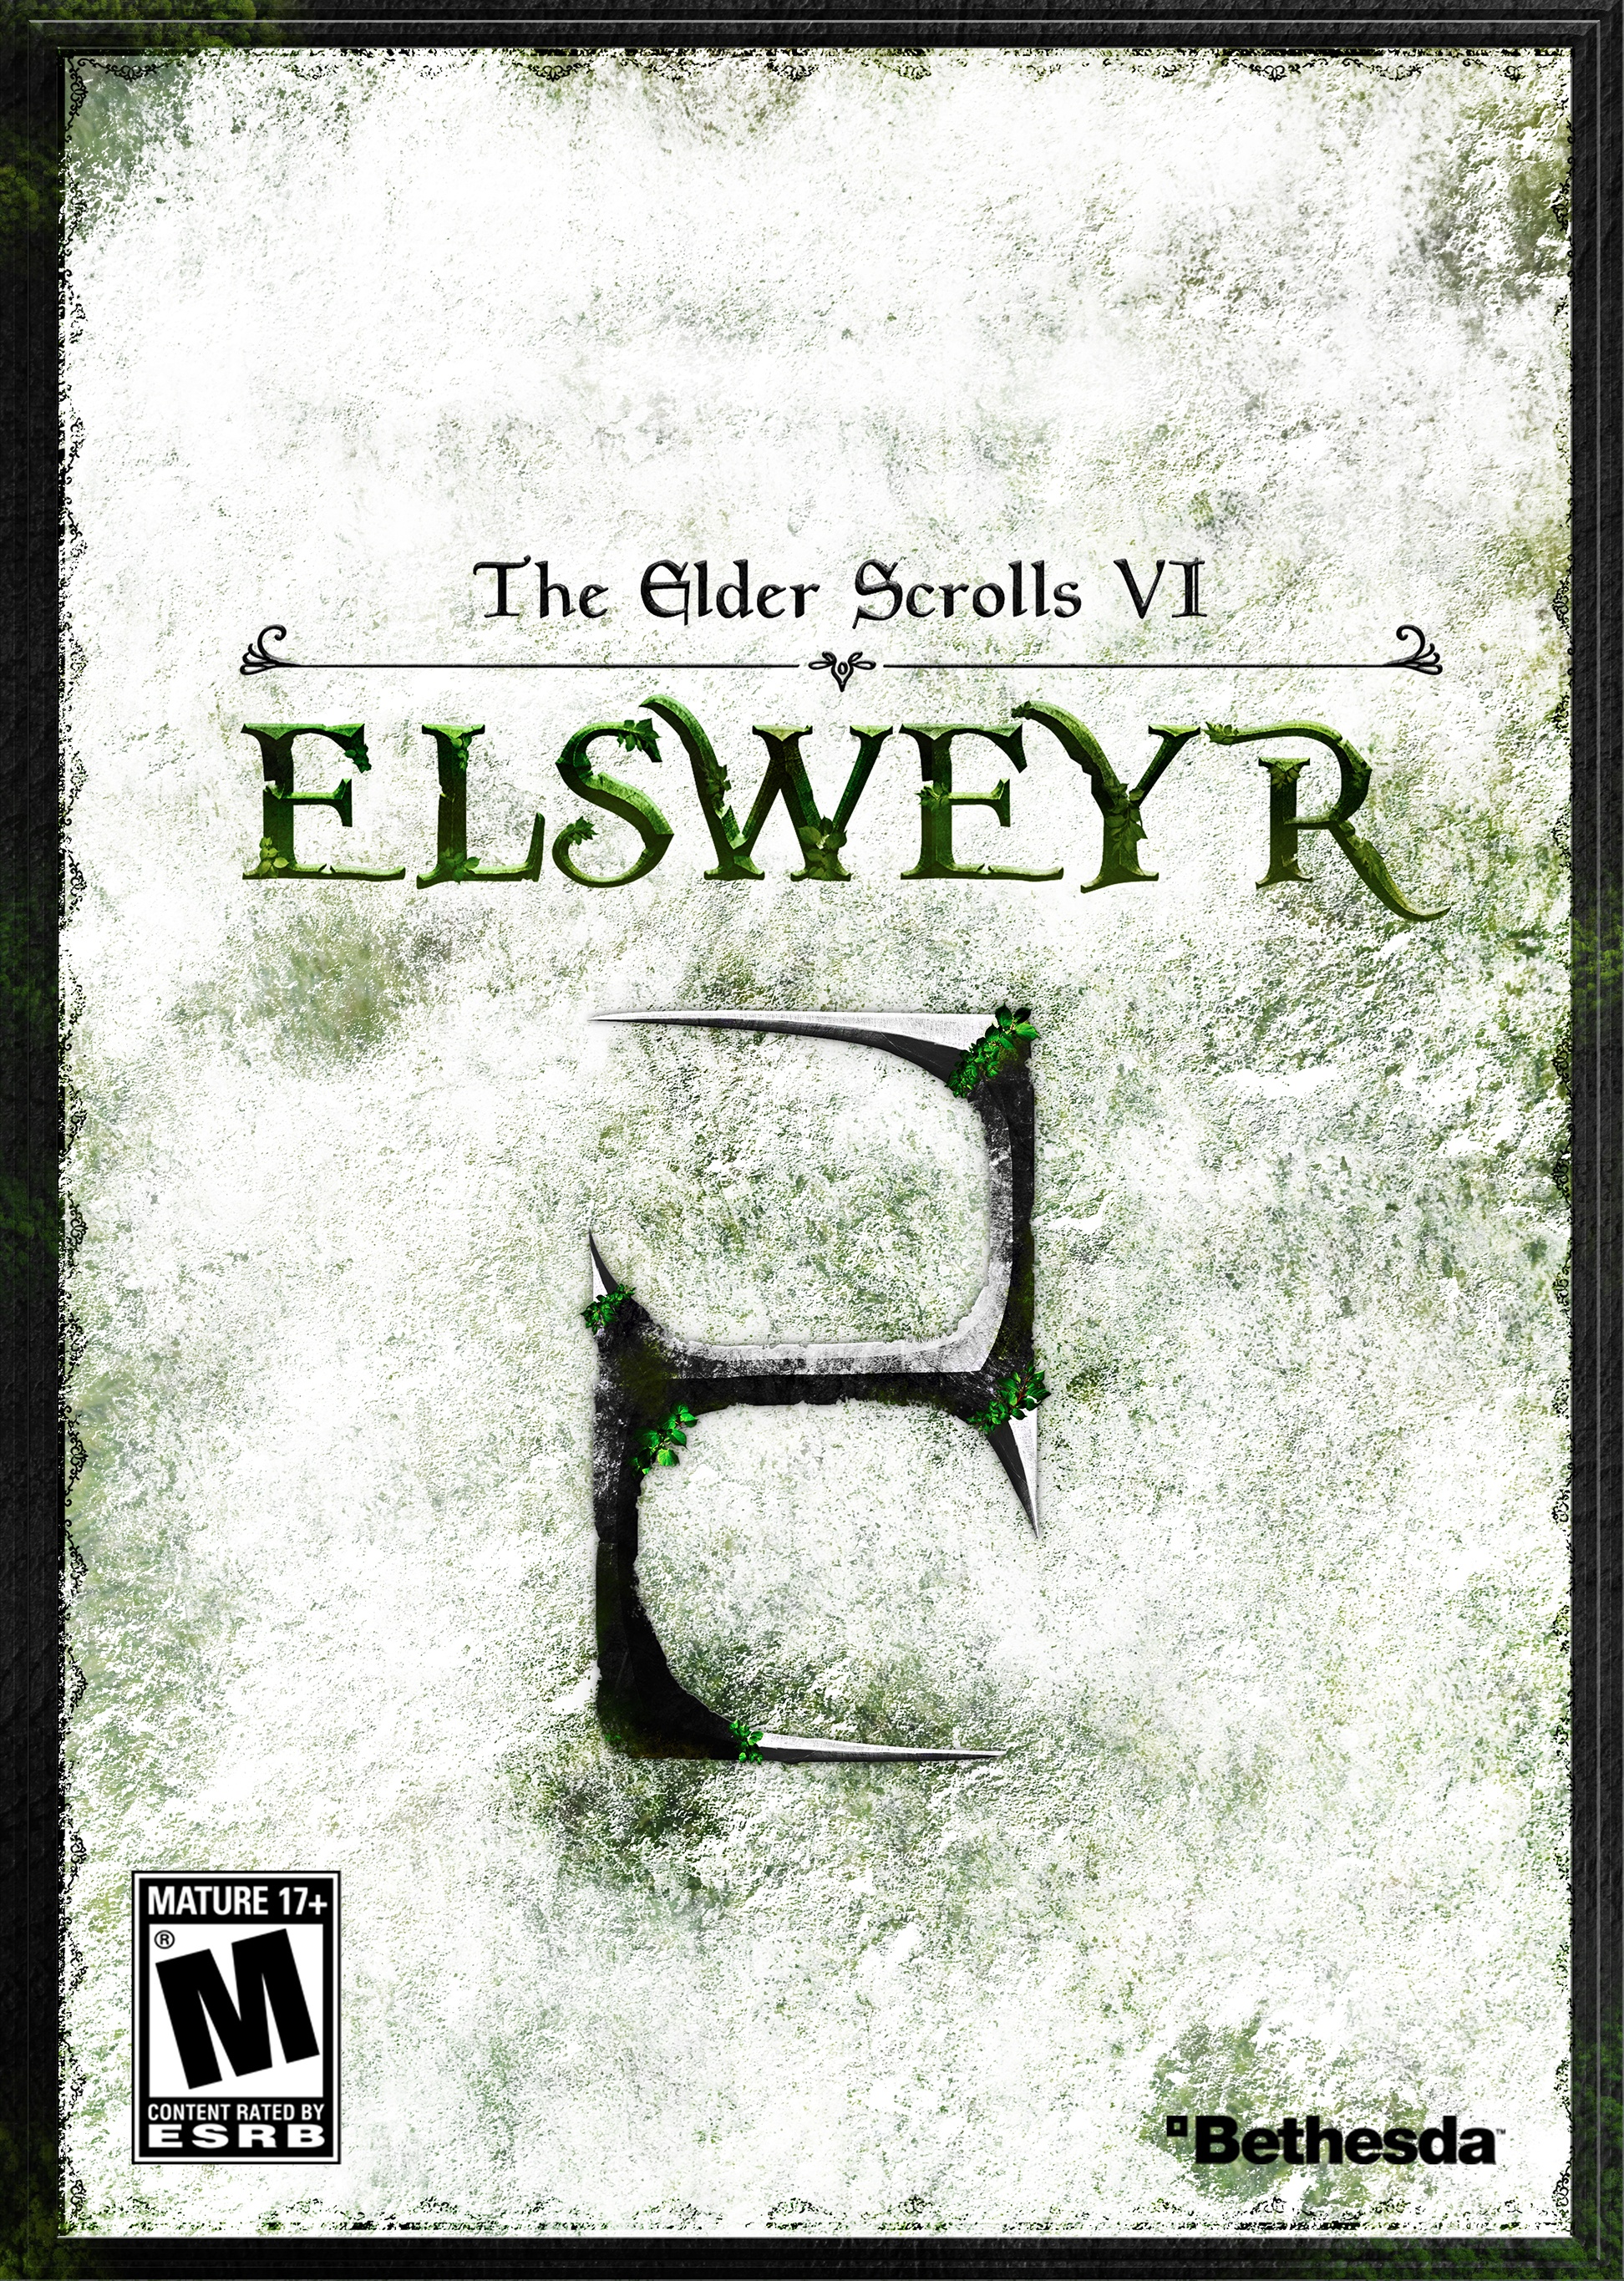 The Elder Scrolls VI: Elsweyr box cover